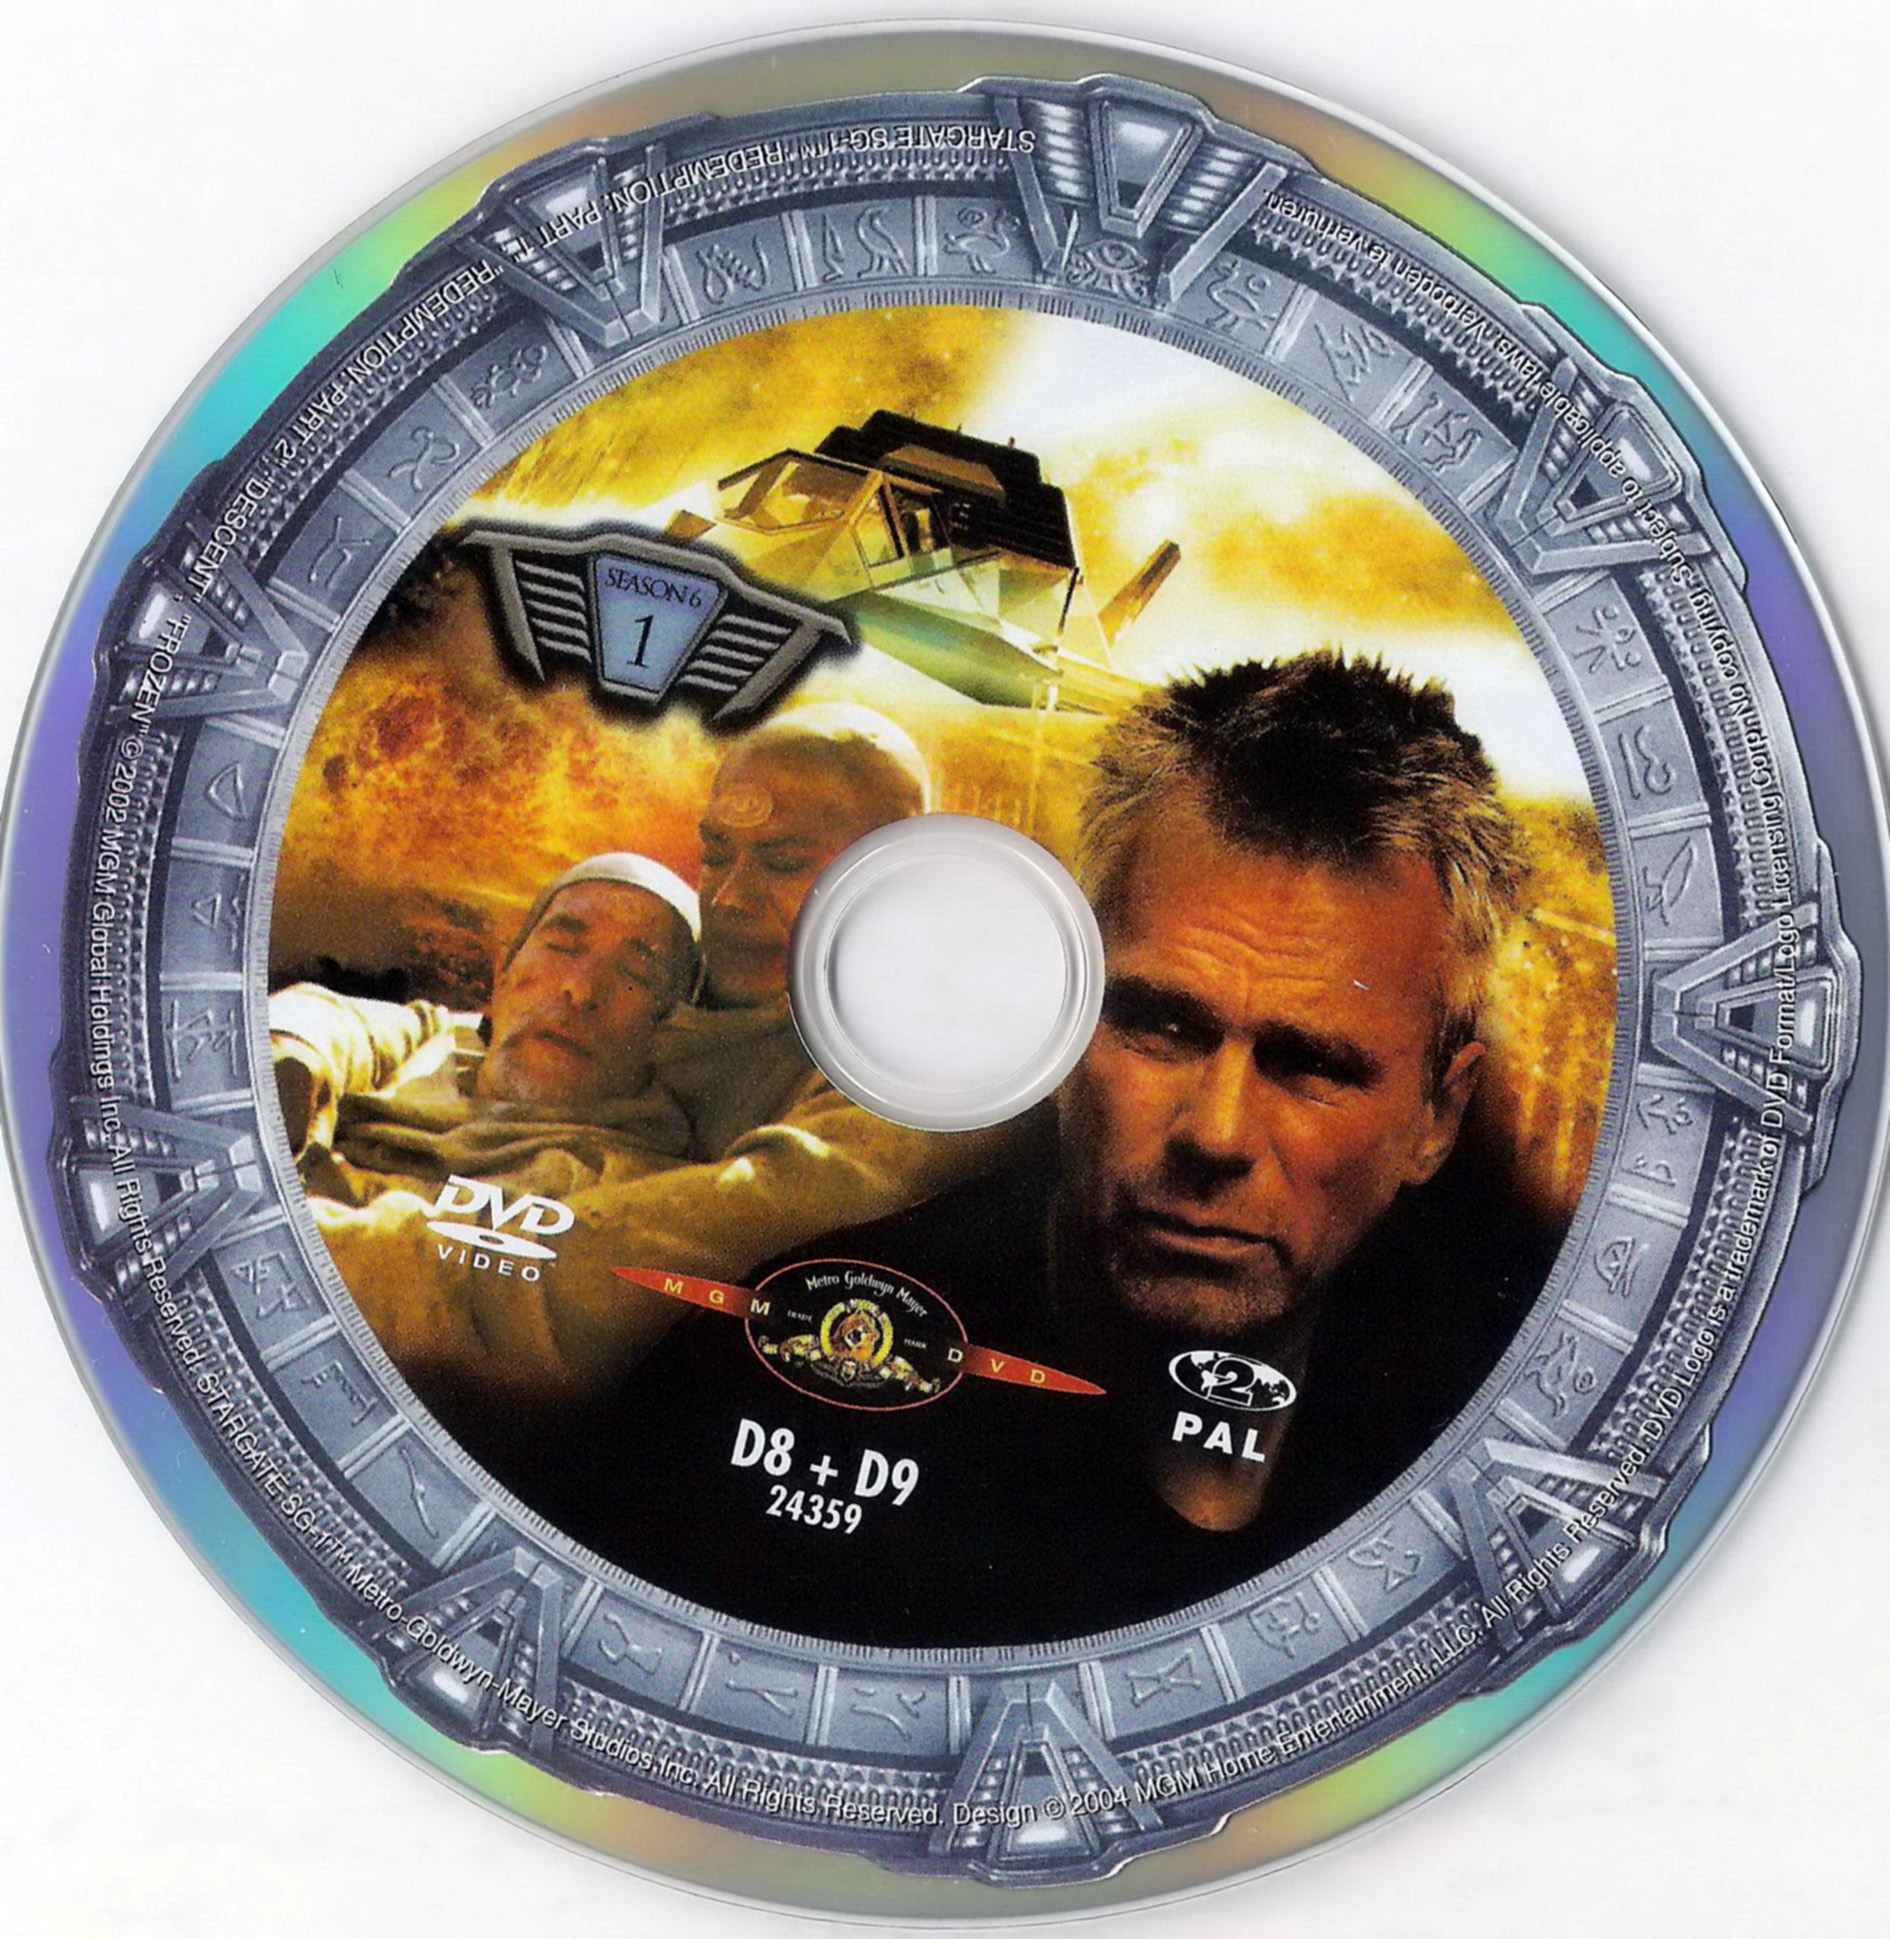 Stargate SG1 Saison 6 DISC 1